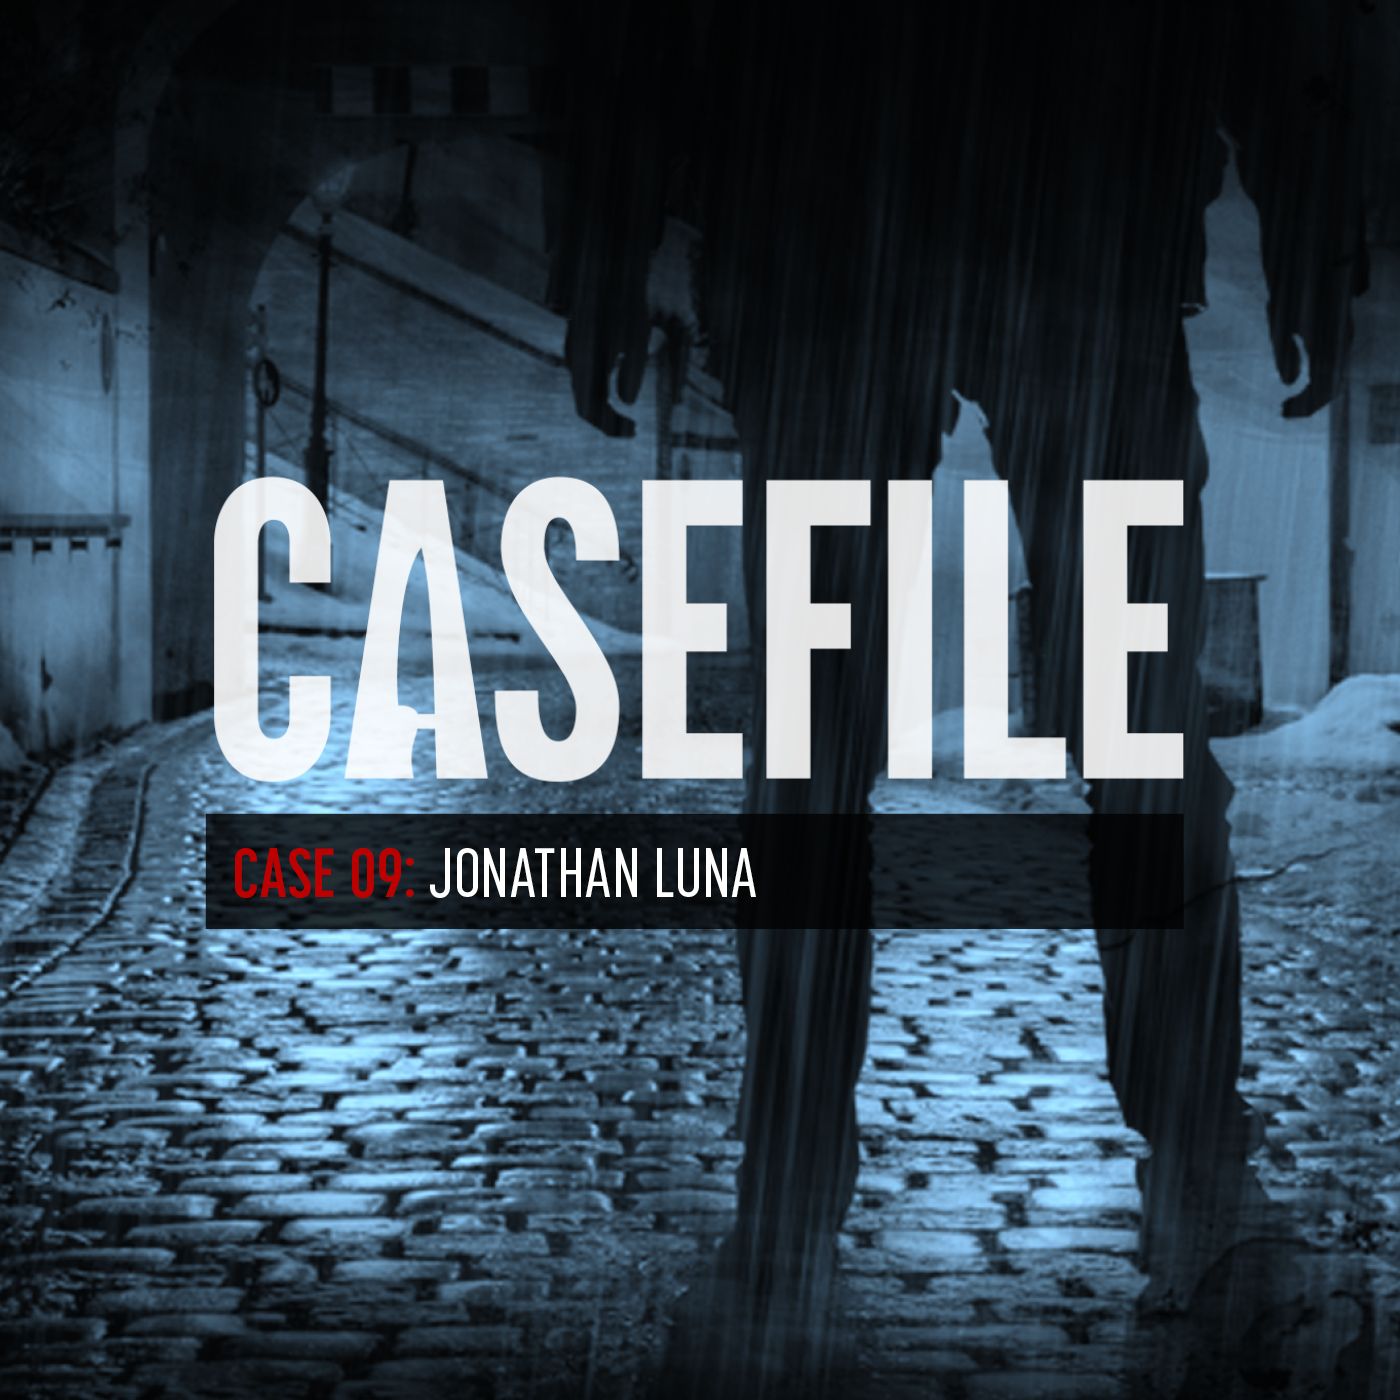 Case 09: Jonathan Luna